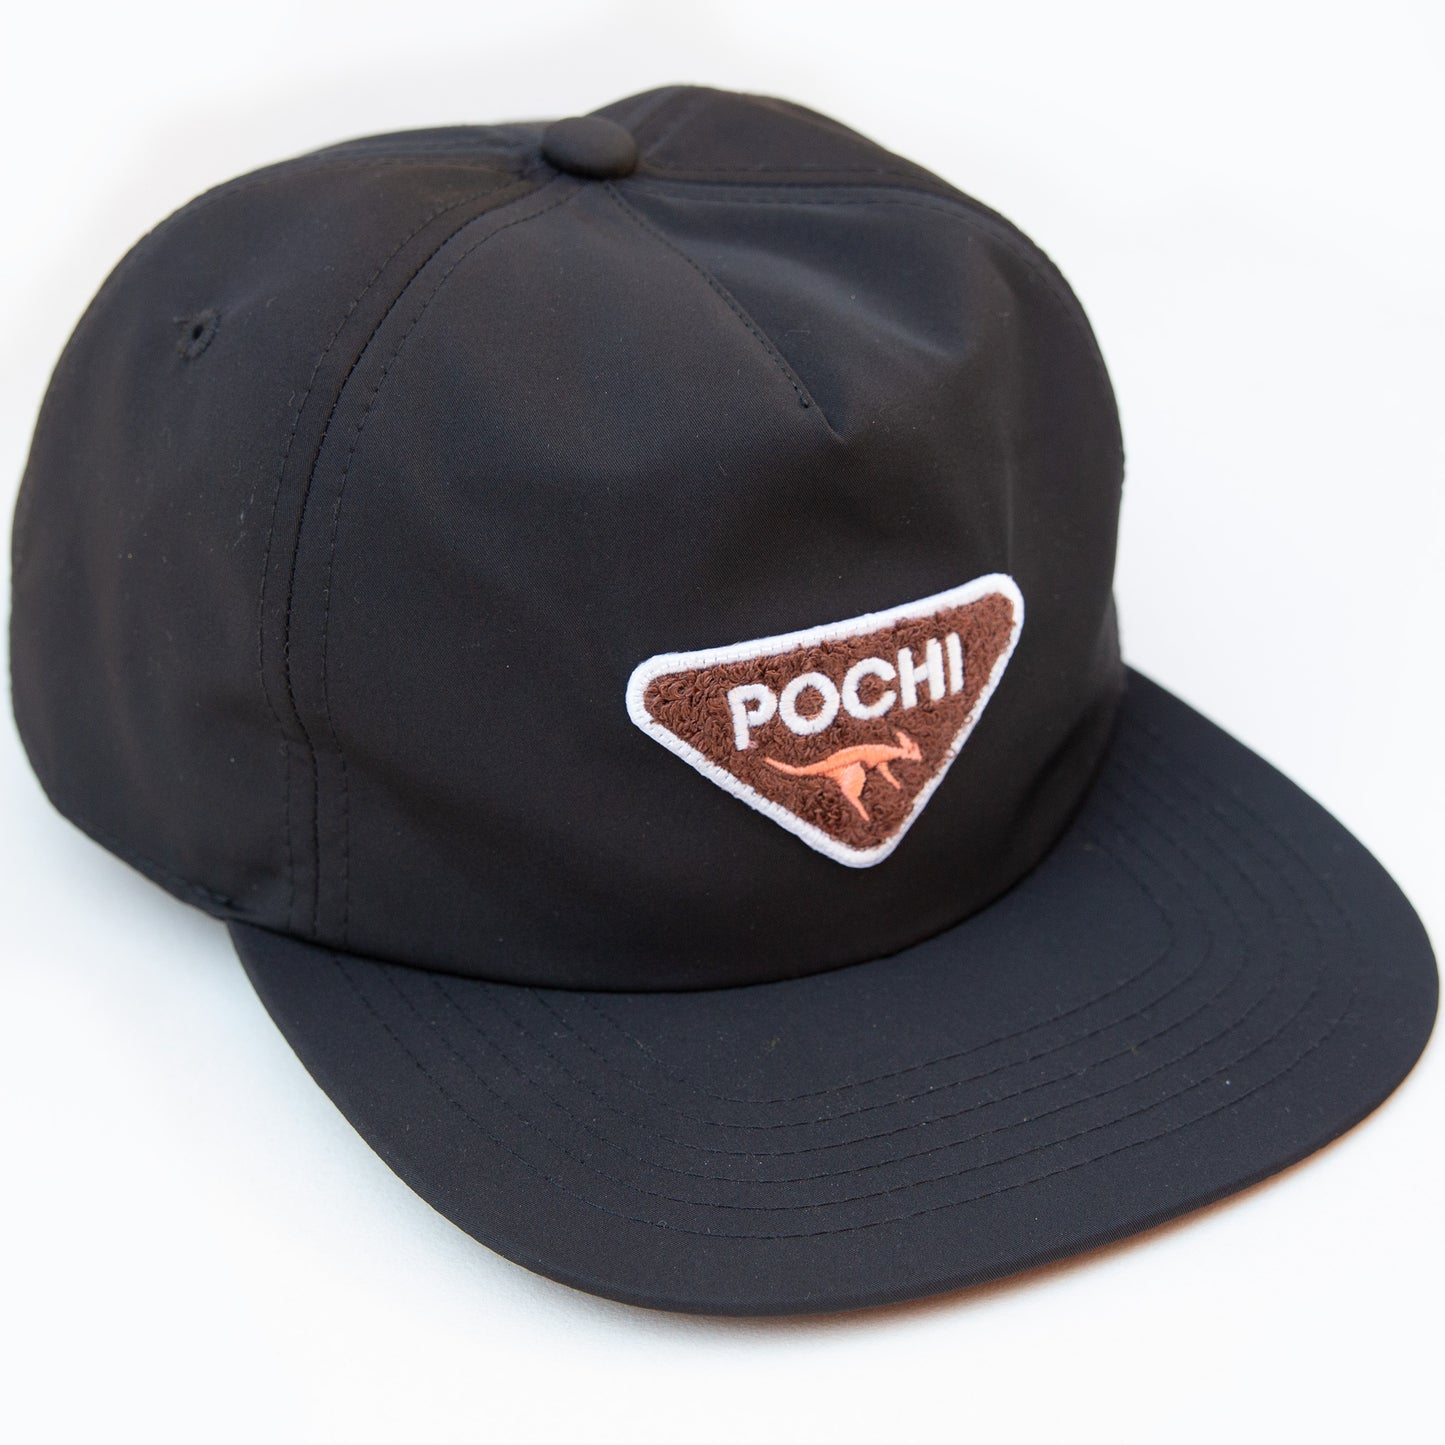 04_Nylon Patch Hat